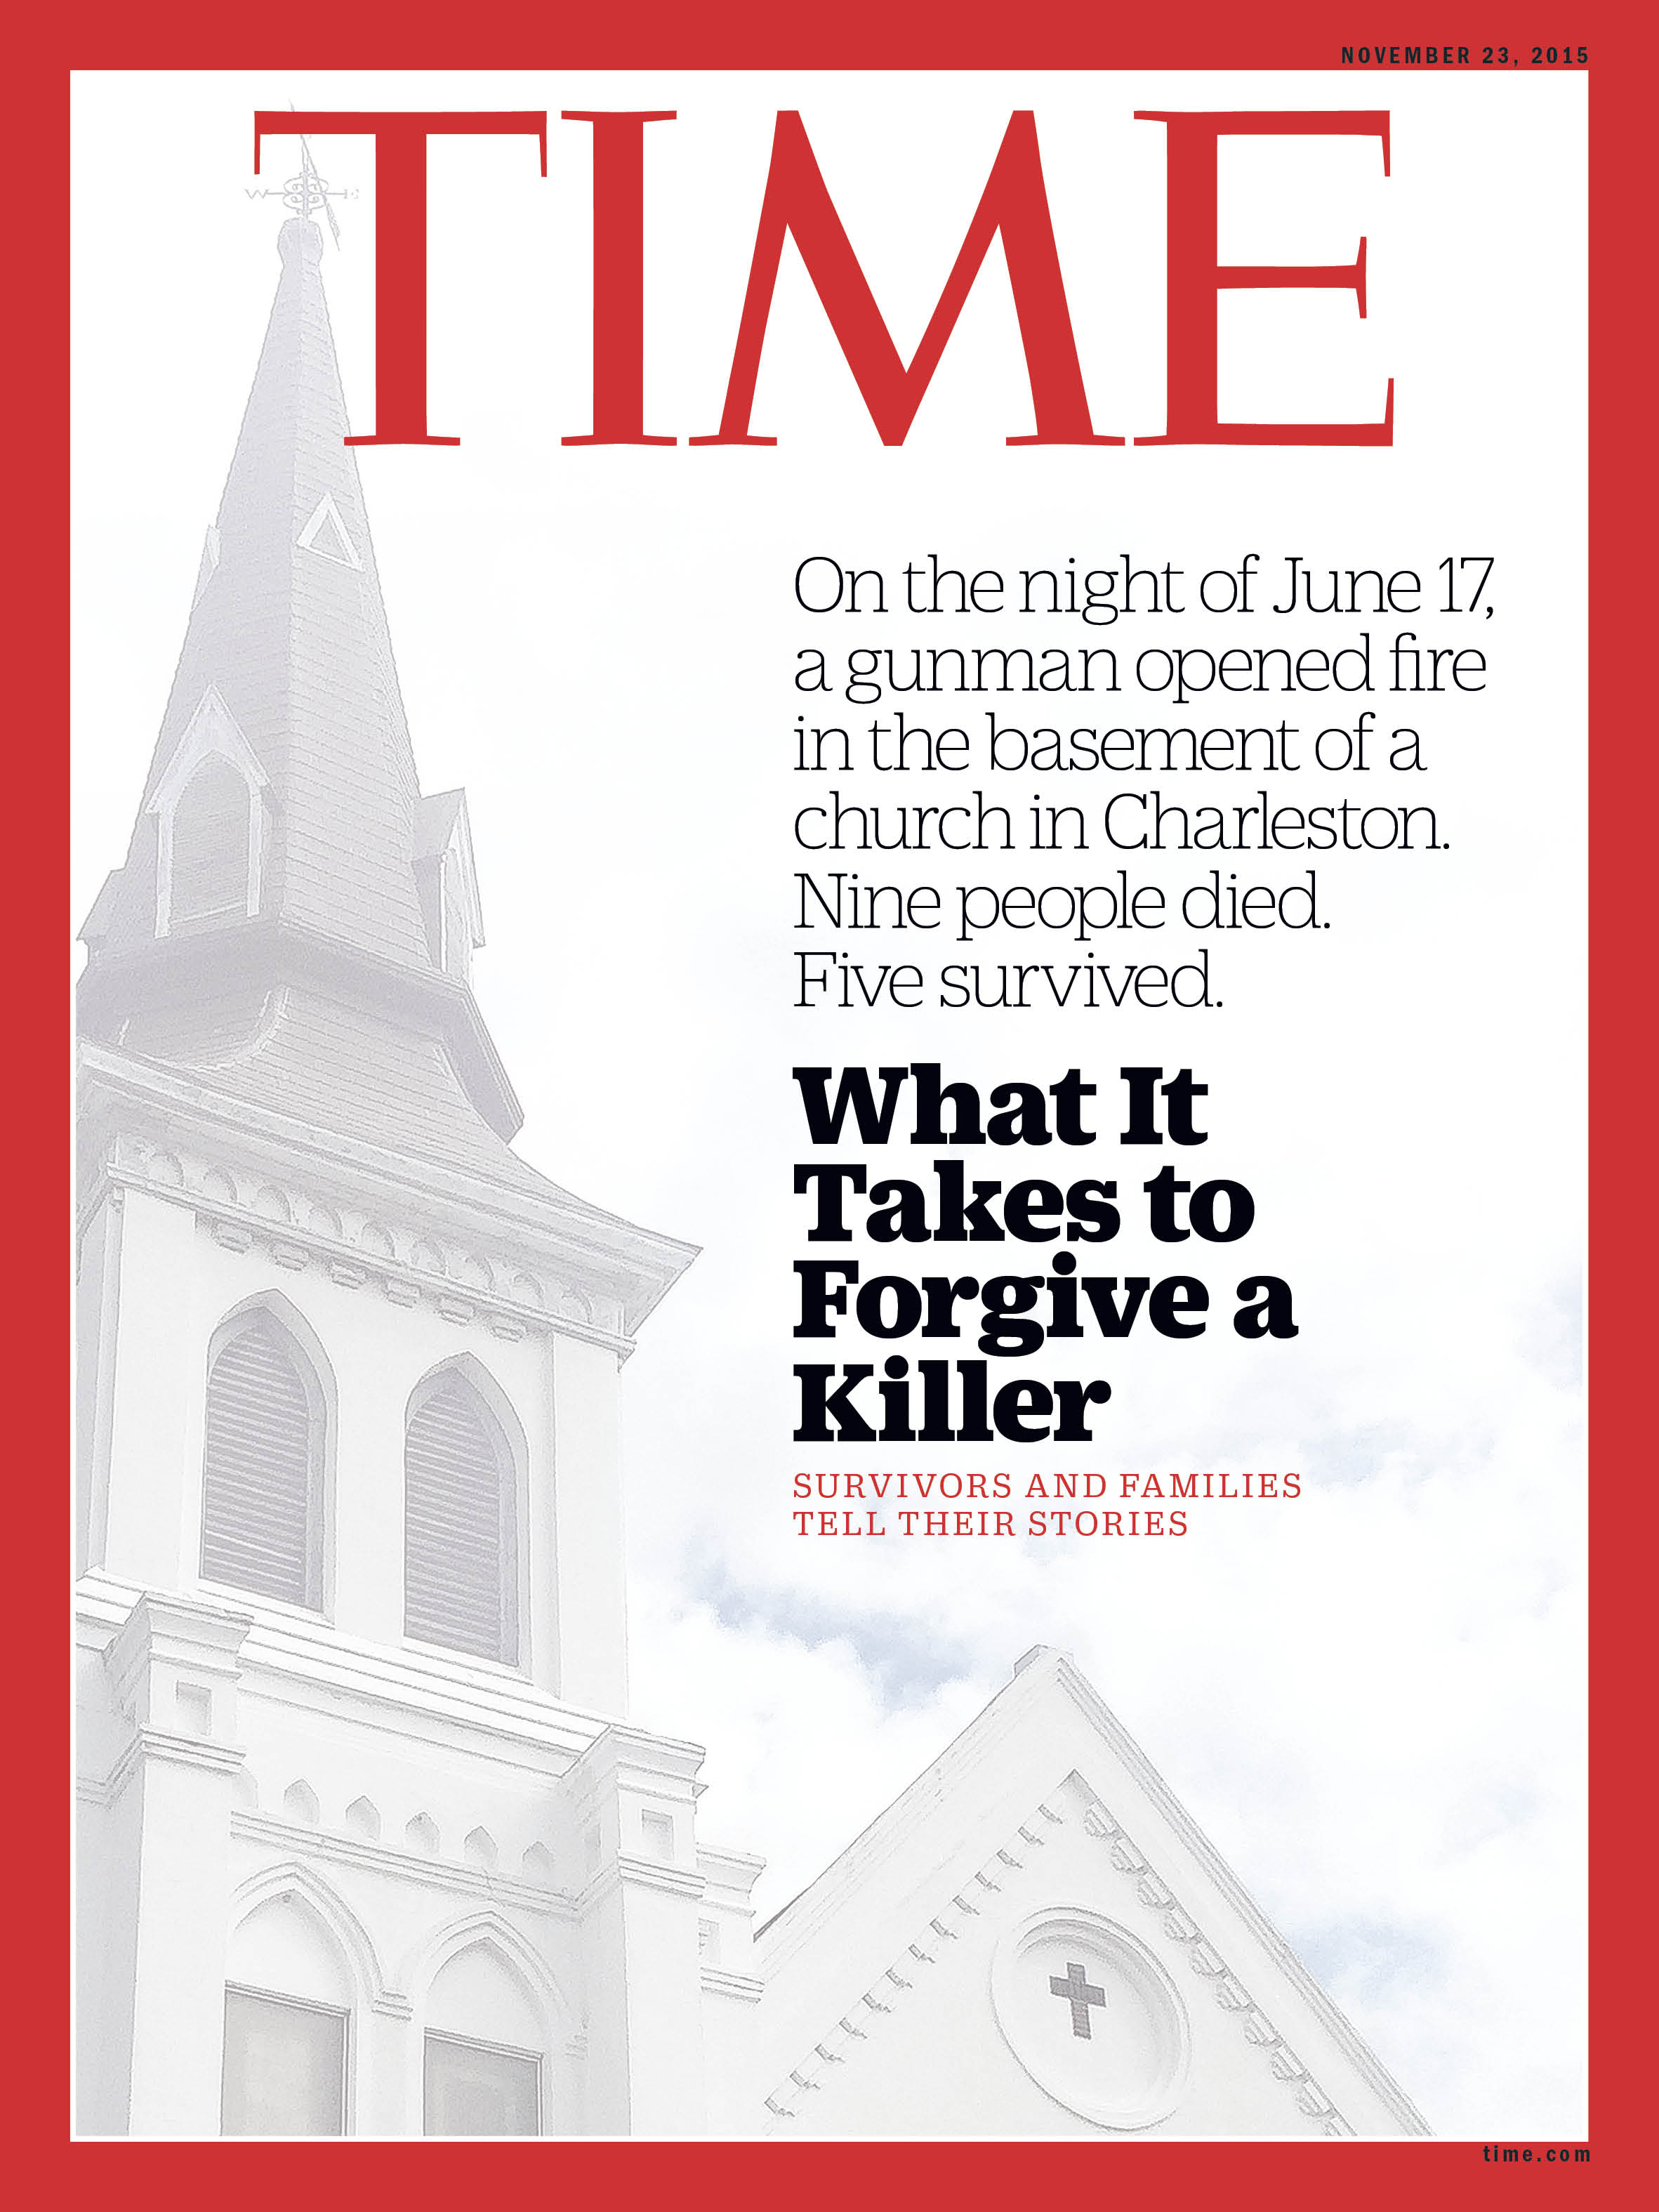 Charleston Church Time Magazine Cover